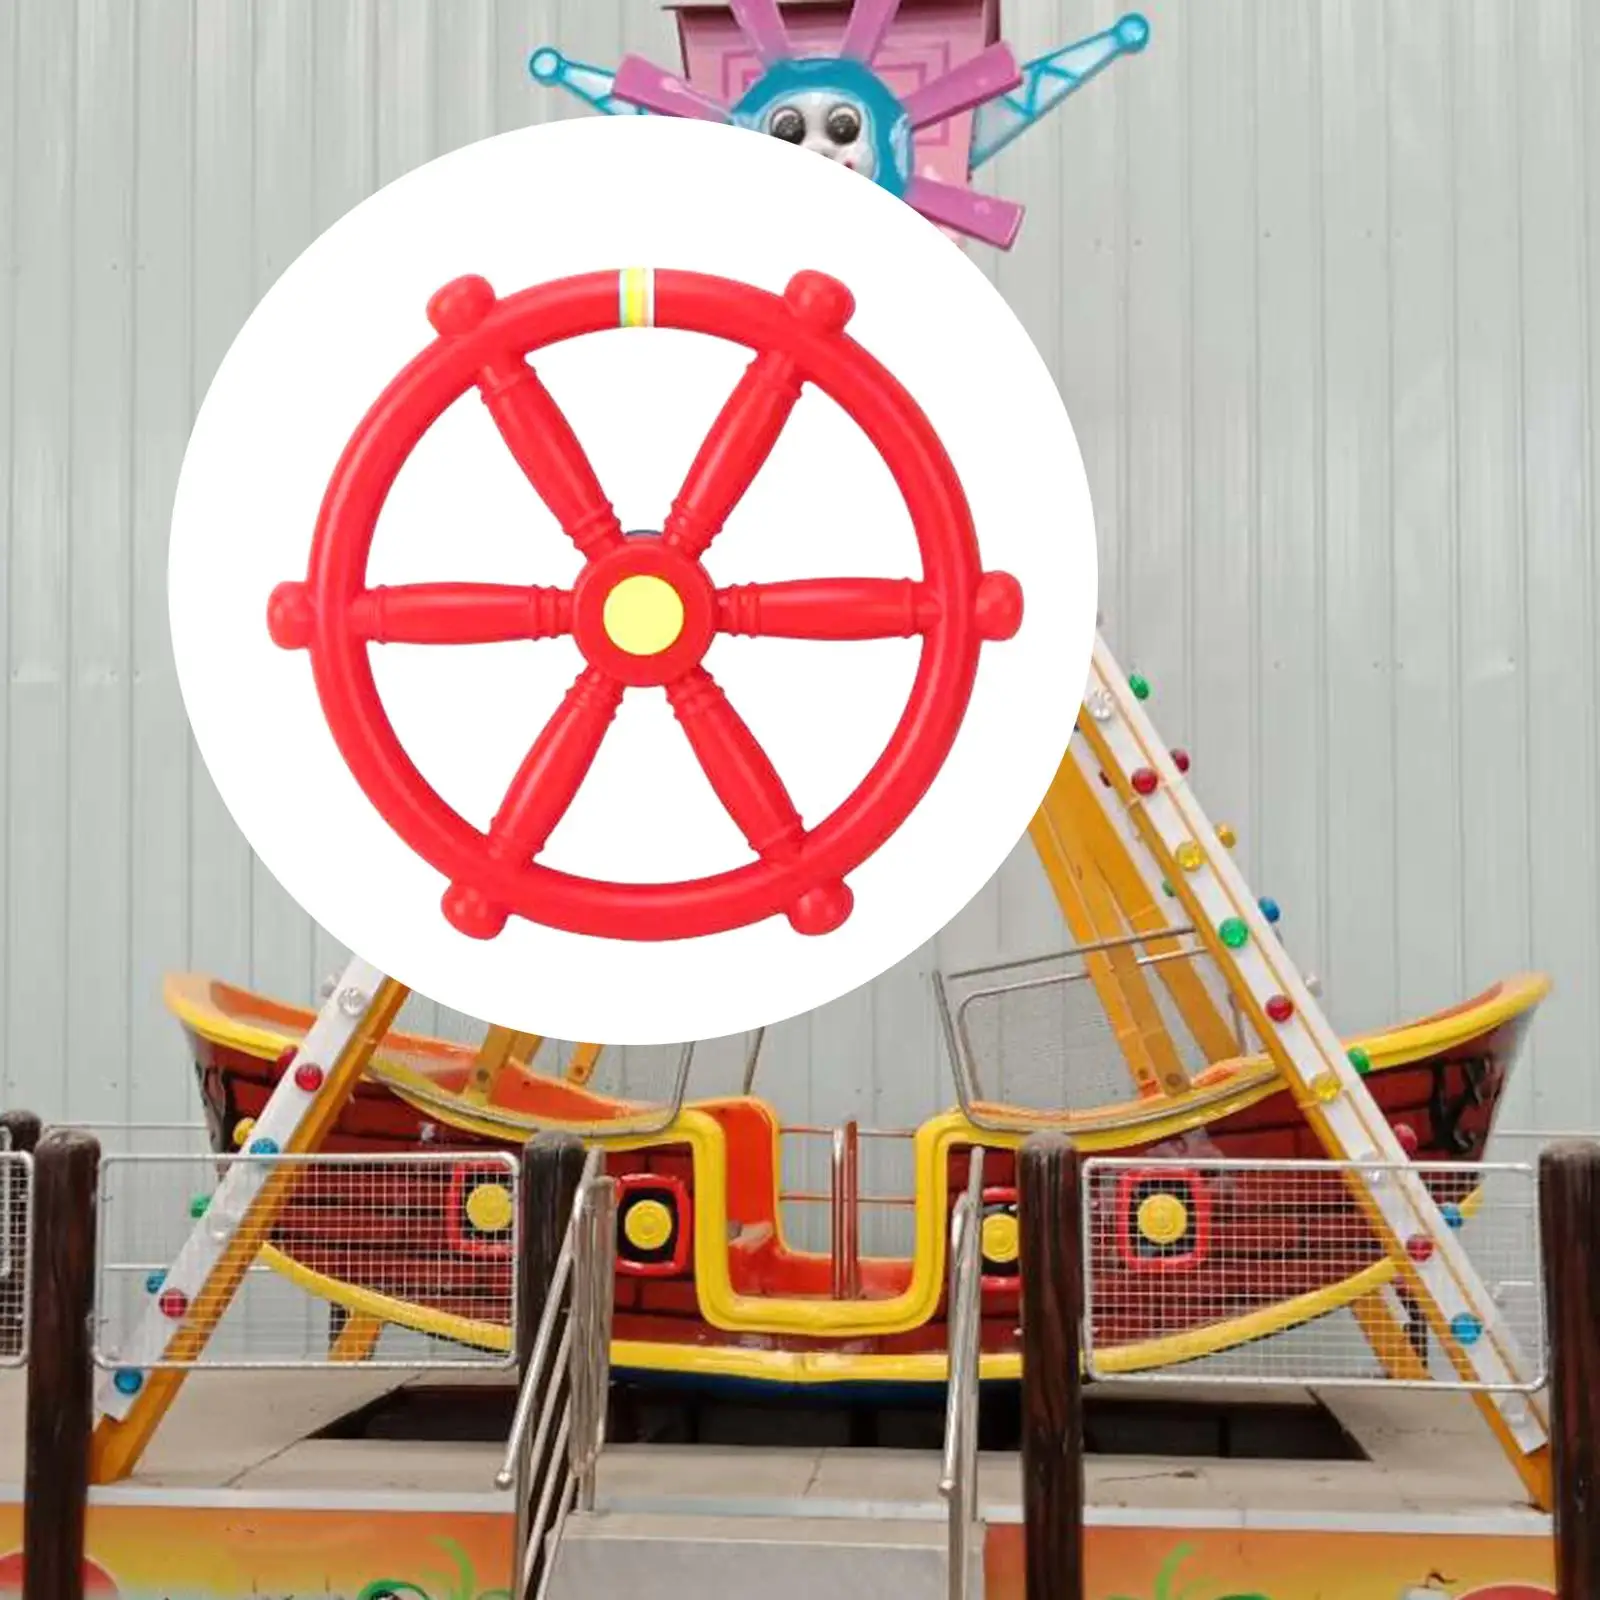 Pirate Ship Wheel Cosplay Props Backyard Playset Equipment Playground Equipment for Park Playhouse Treehouse Jungle Gym Backyard